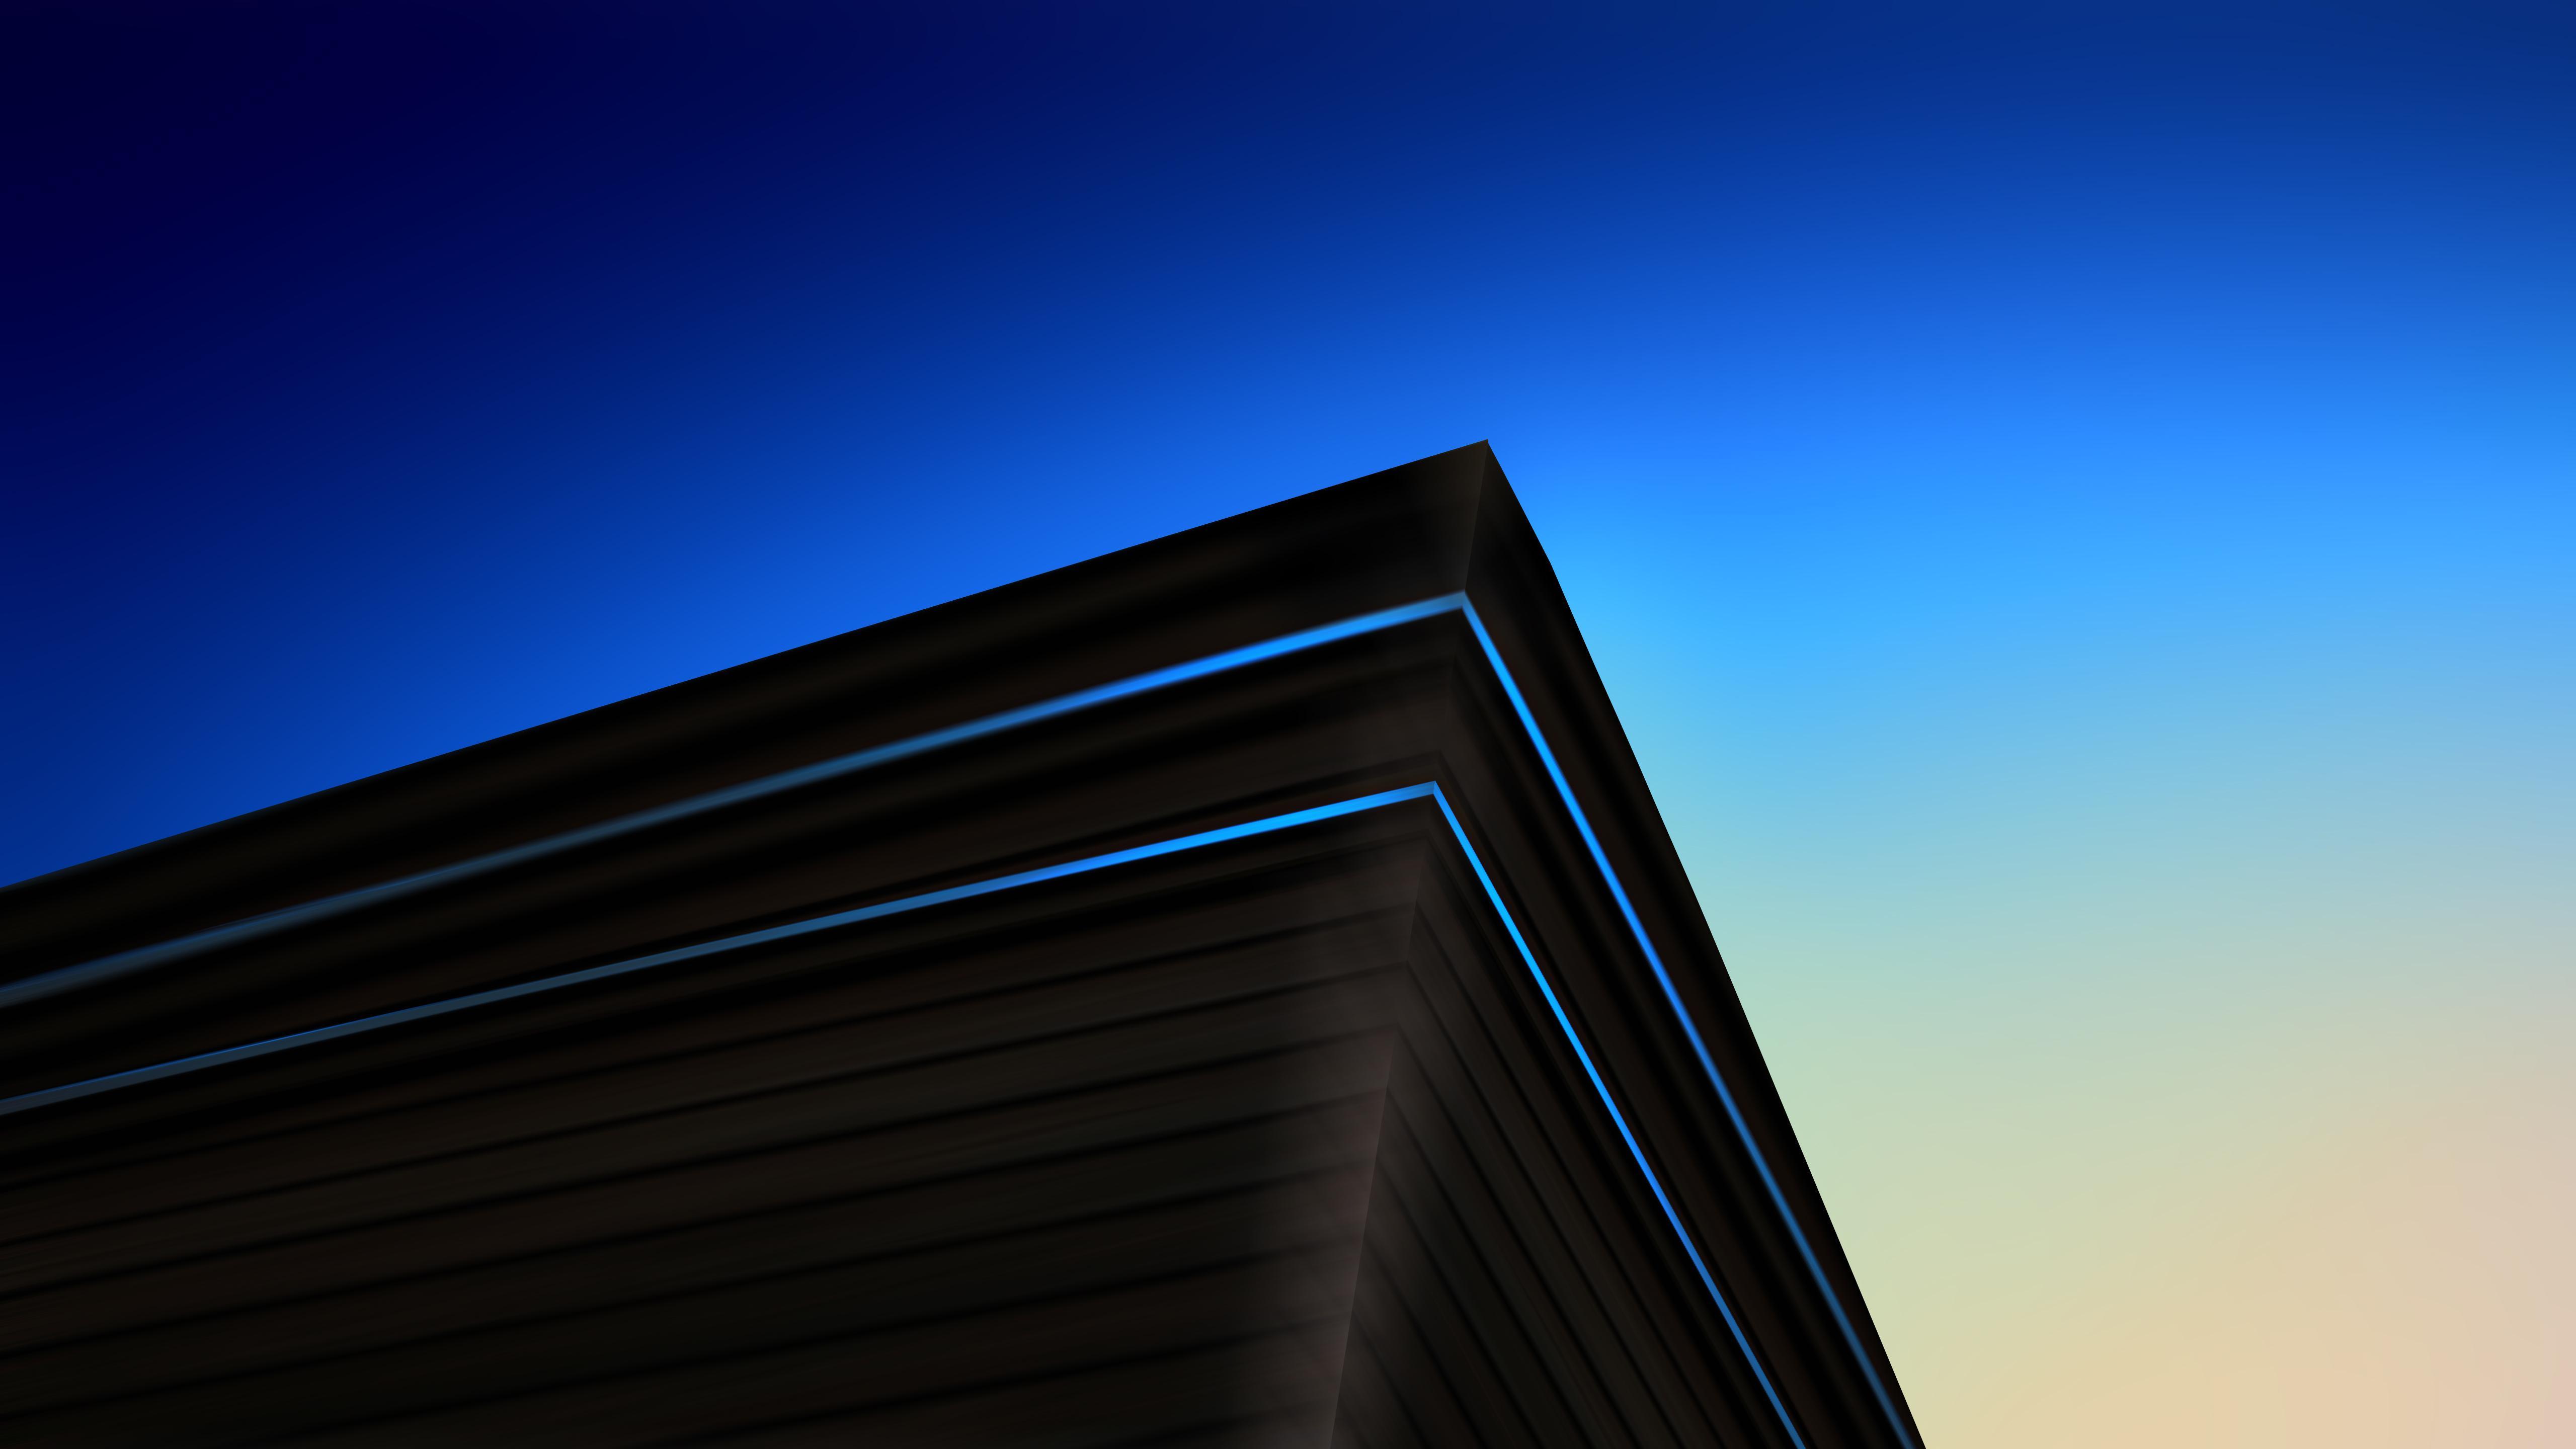 Architecture Minimalist 5k, HD Abstract, 4k Wallpaper, Image